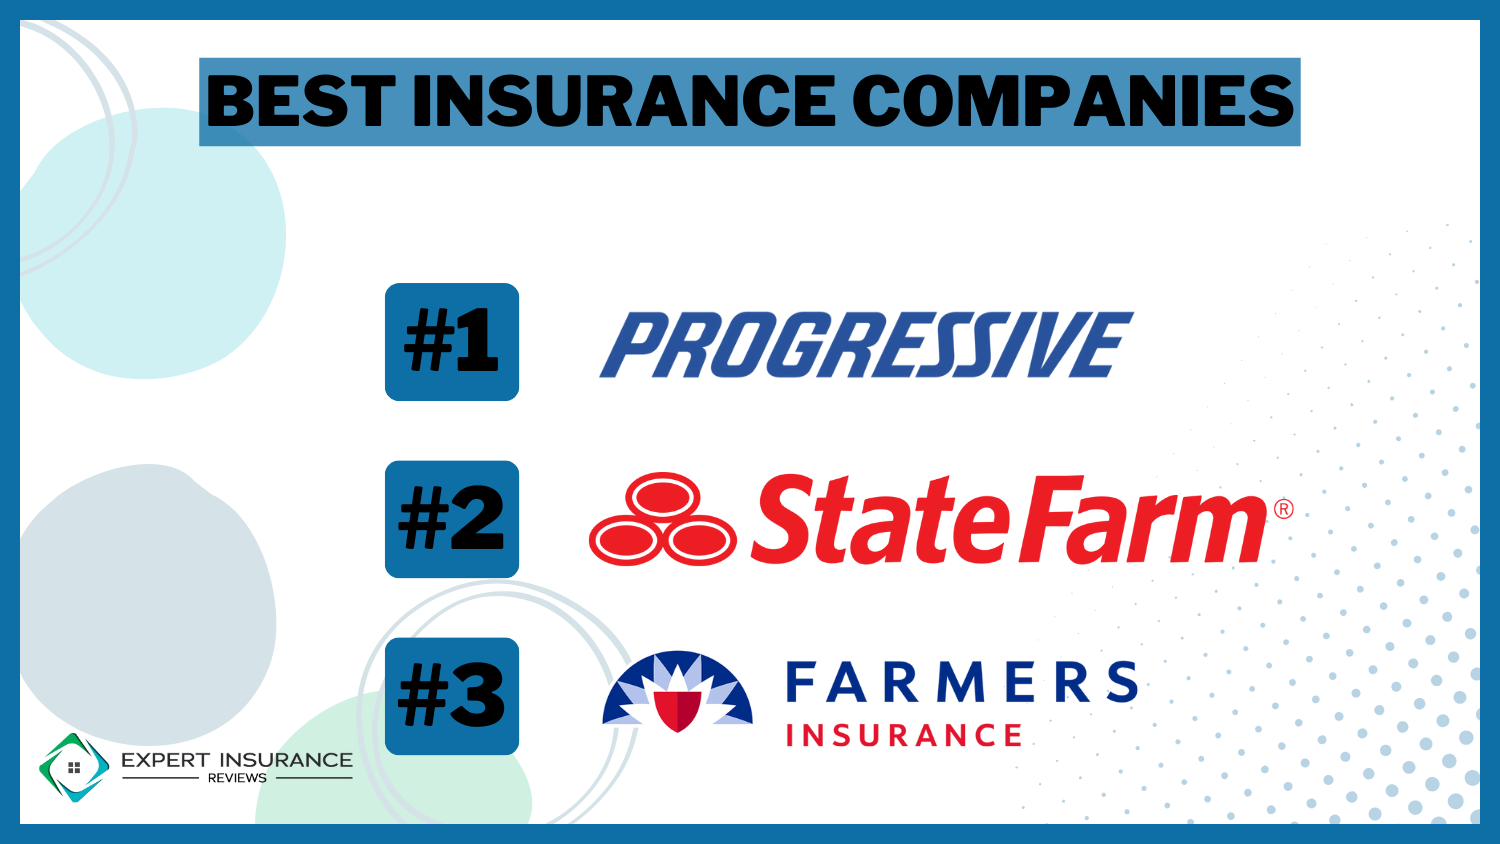 9 Best Insurance Companies: Progressive, State Farm, and Farmers